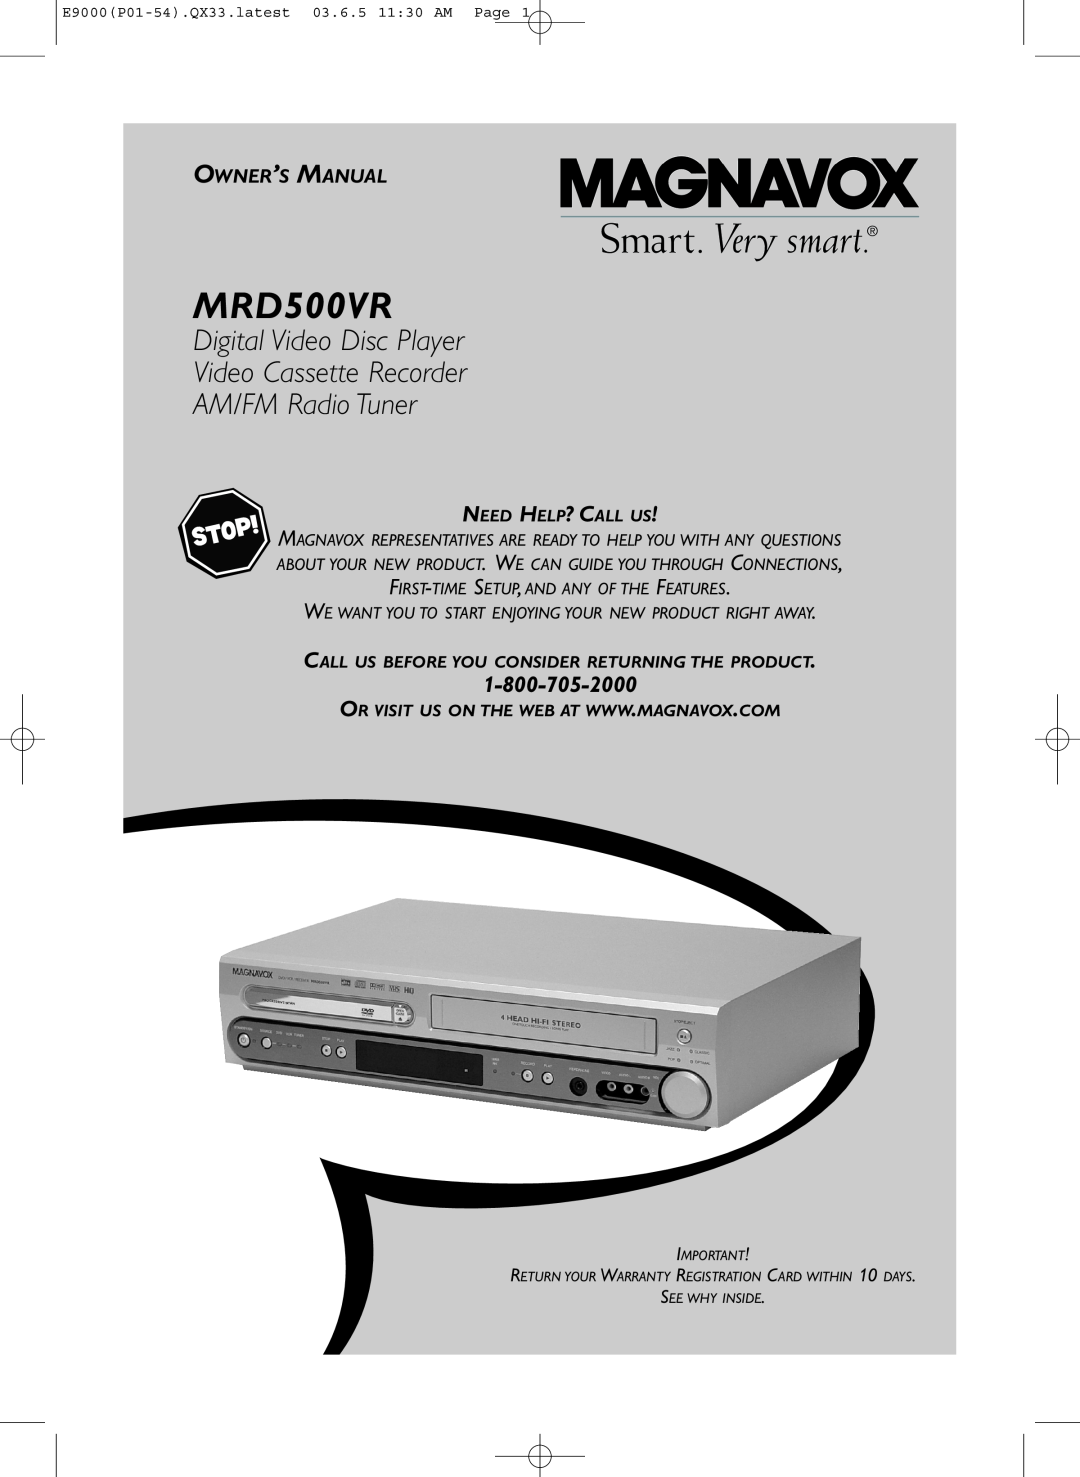 Magnavox MRD500VR owner manual Digital Video Disc Player Video Cassette Recorder AM/FM Radio Tuner, Owner’S Manual 